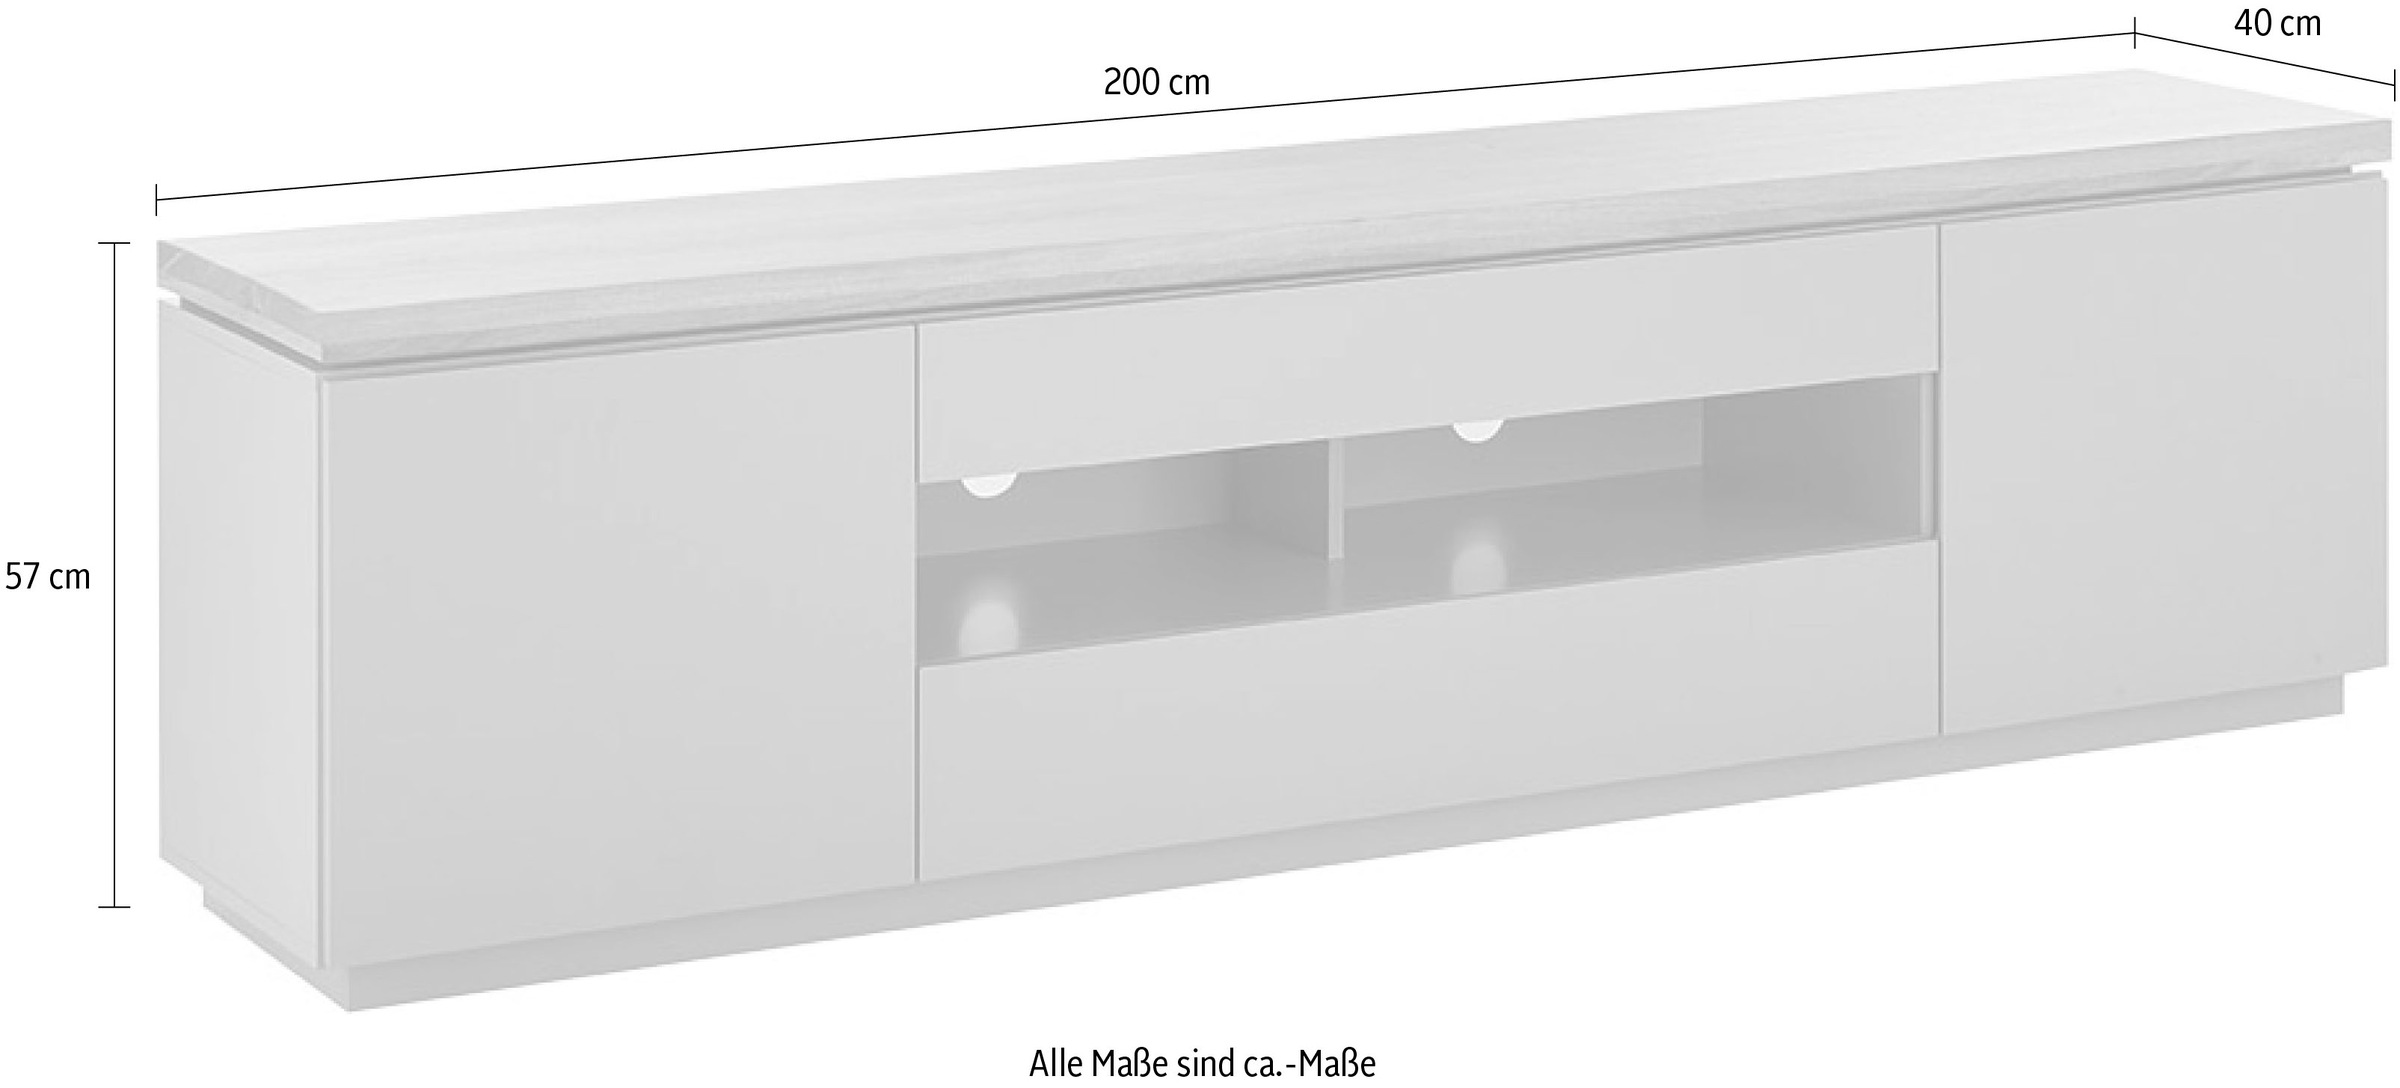 MCA furniture Lowboard »PALAMOS Lowboard«, Türen mit Dämpfung